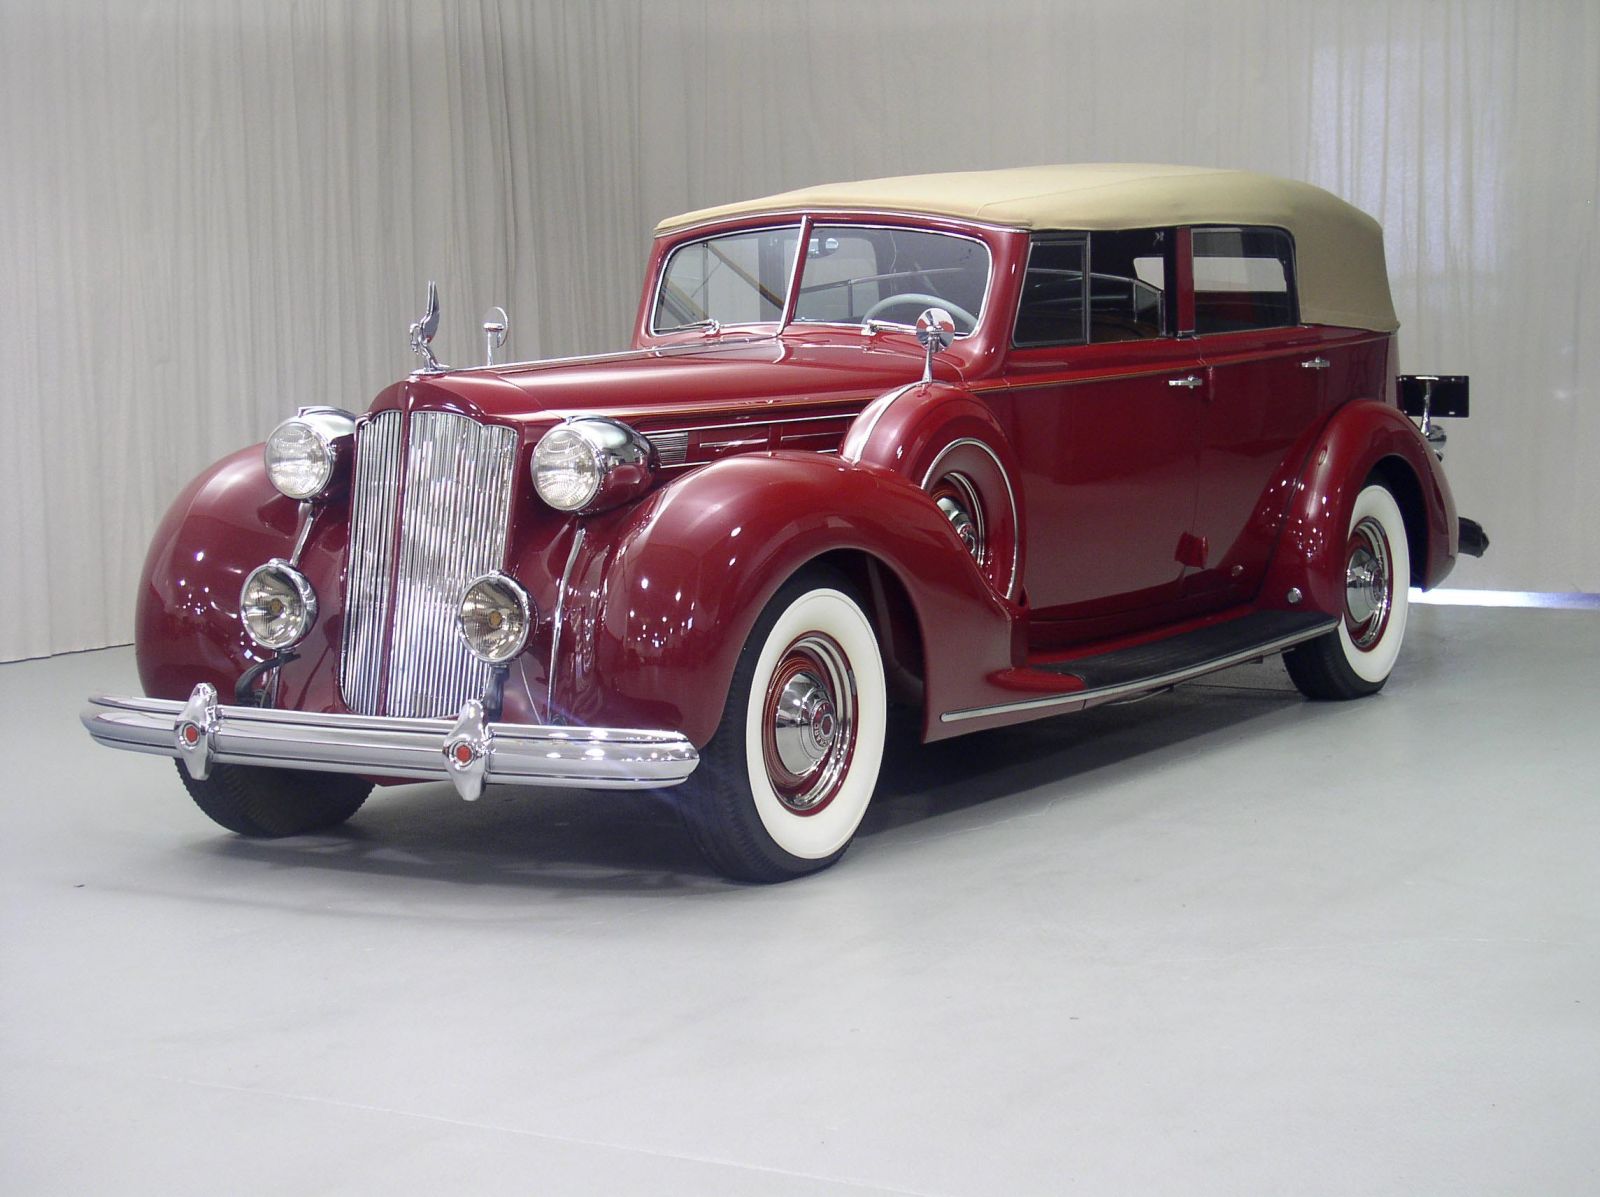 1938 Packard Berline Classic Car For Sale | Buy 1938 Packard Berline at Hyman LTD